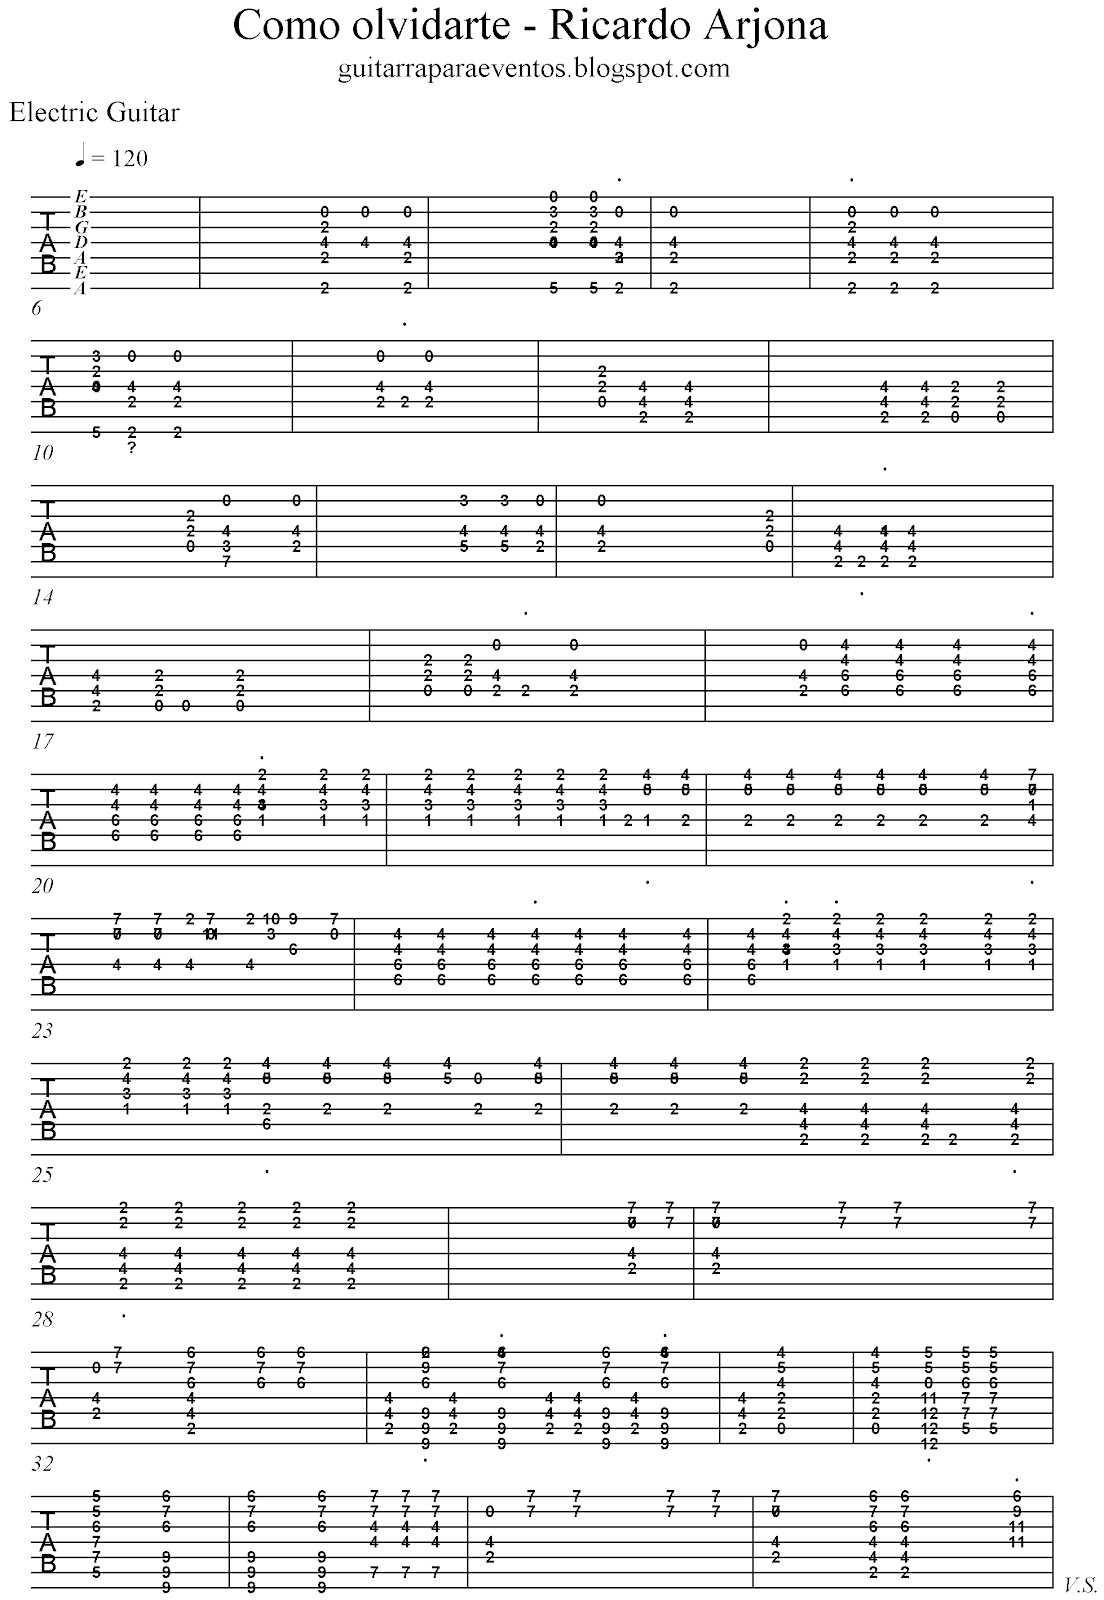 Partitura/tablatura para guitarra de Como olvidarte de Ricardo Arjona